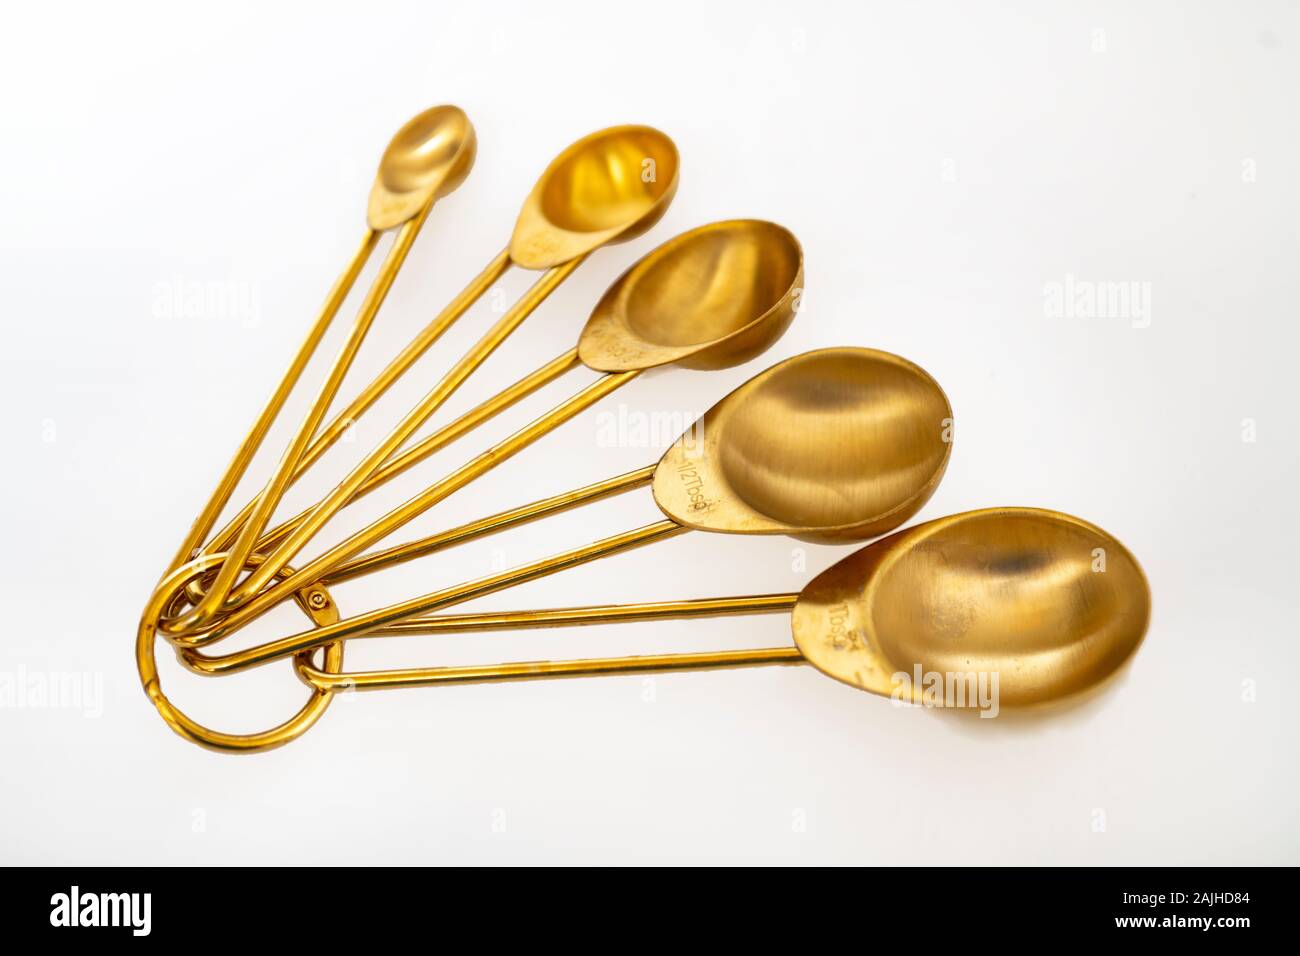 Brass measuring spoons non metric on white background Stock Photo